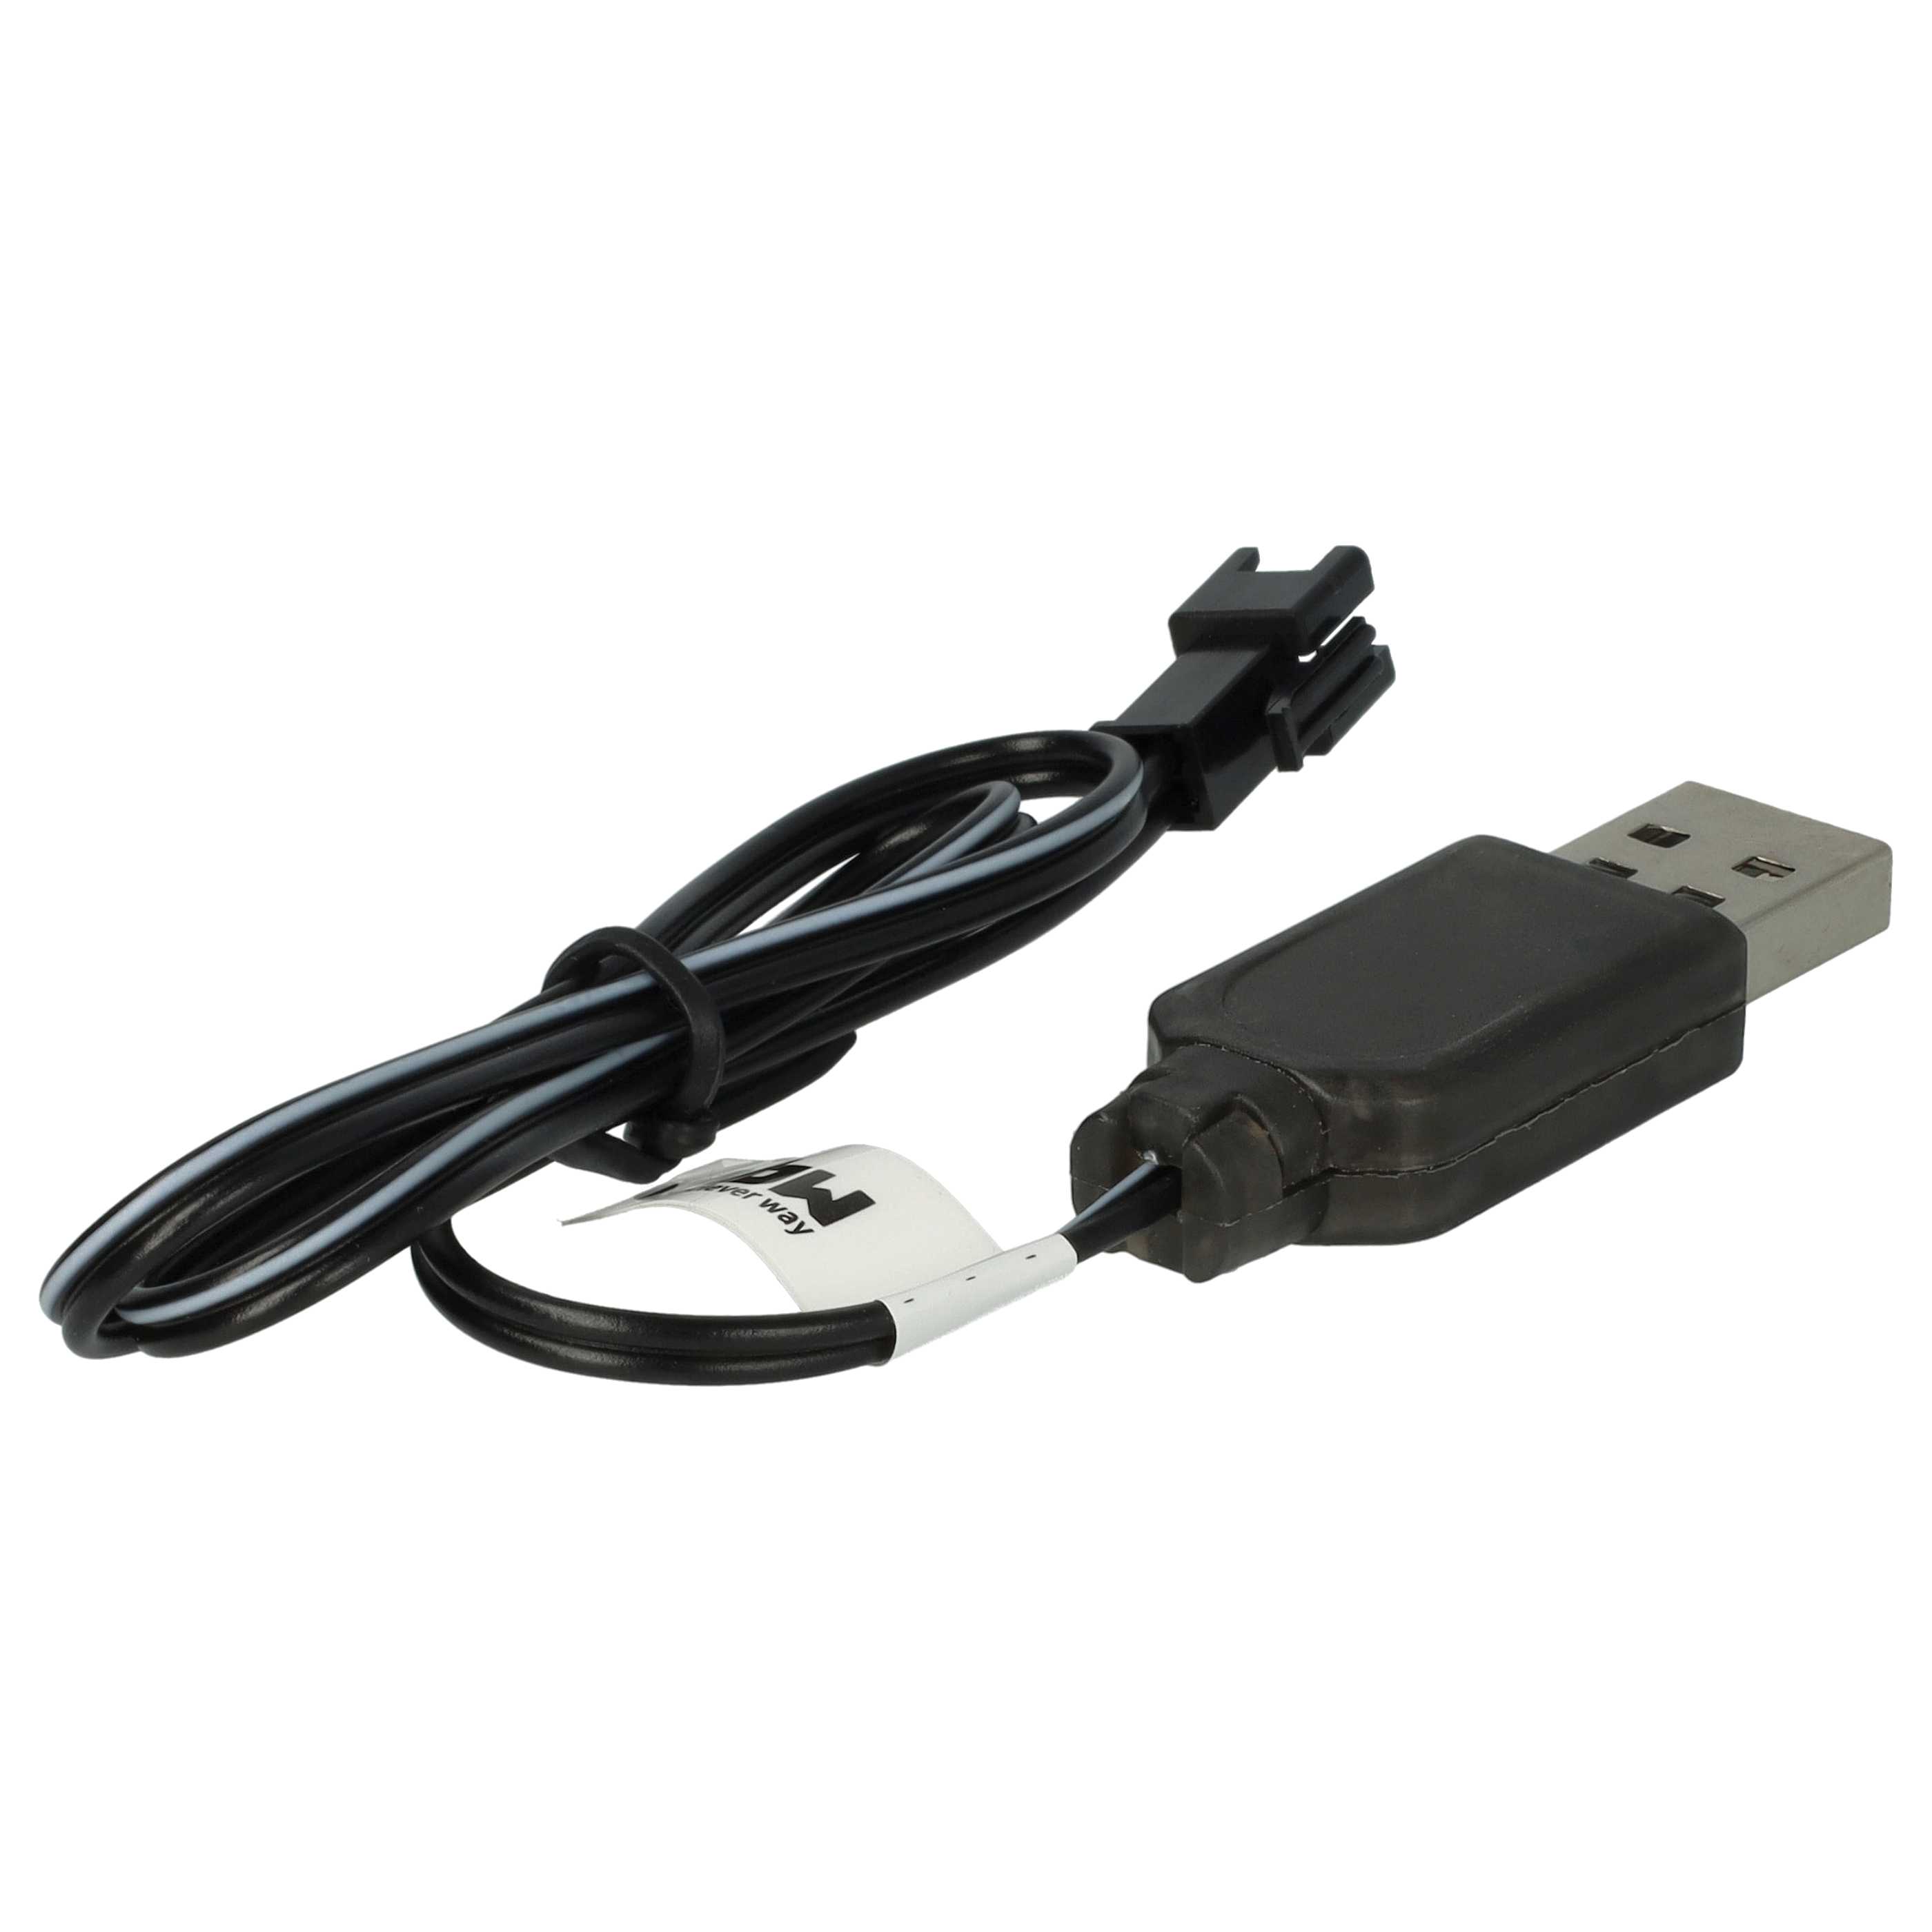 USB-Ladekabel passend für RC-Akkus mit SM-2P-Anschluss, RC-Modellbau Akkupacks - 60cm 3,6V